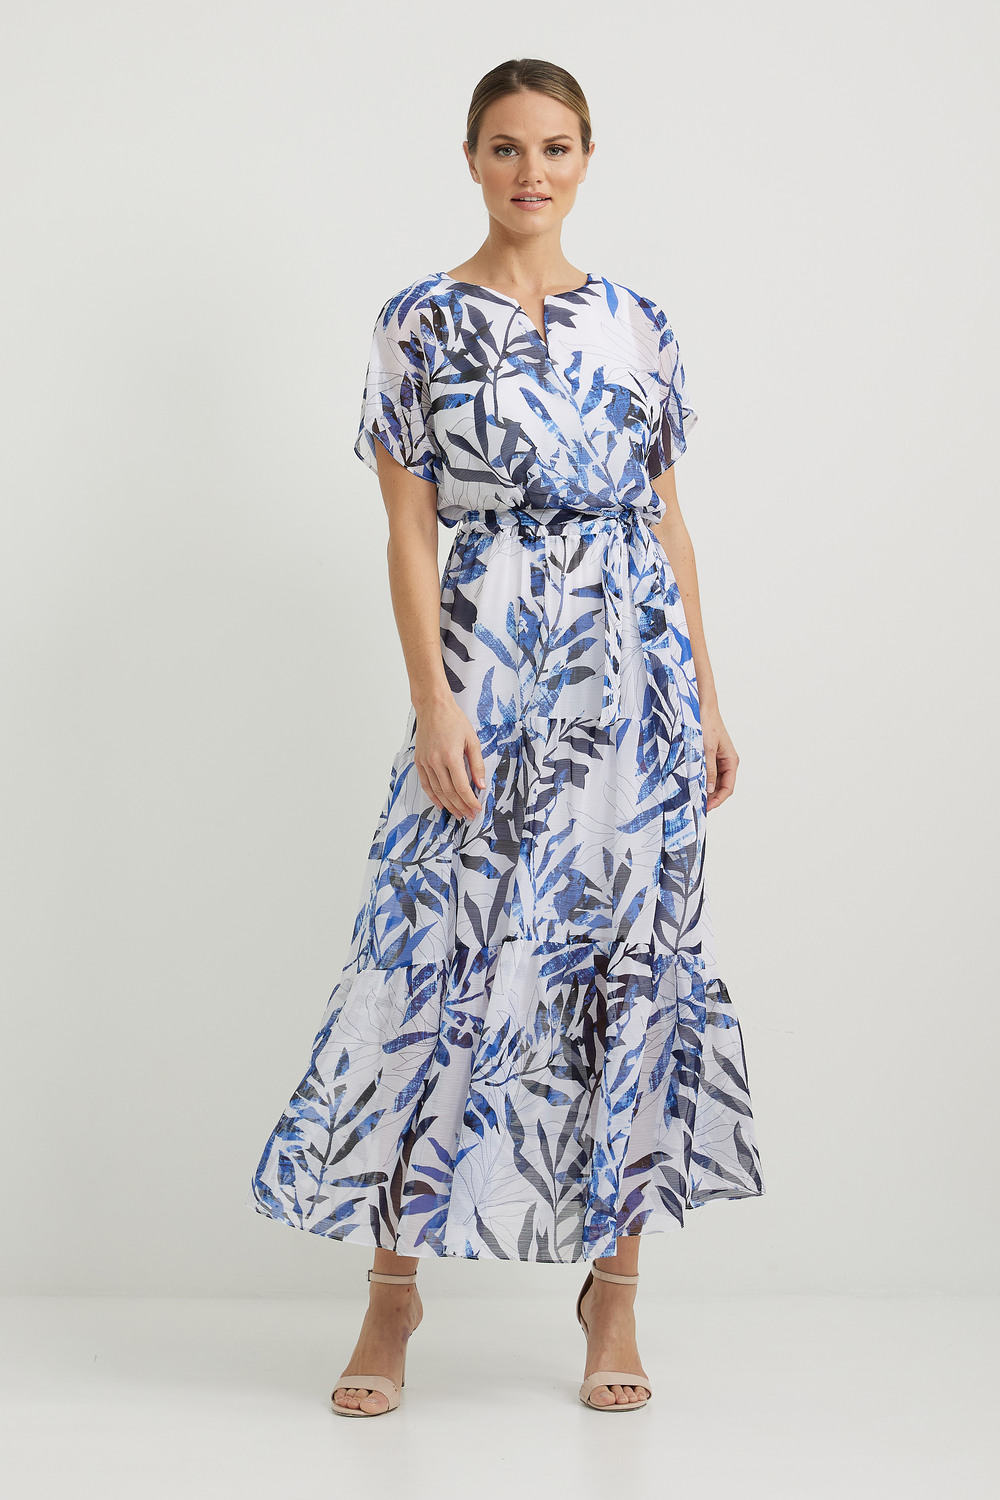 Joseph Ribkoff Leaf Print Dress Style 222285. Vanilla/multi